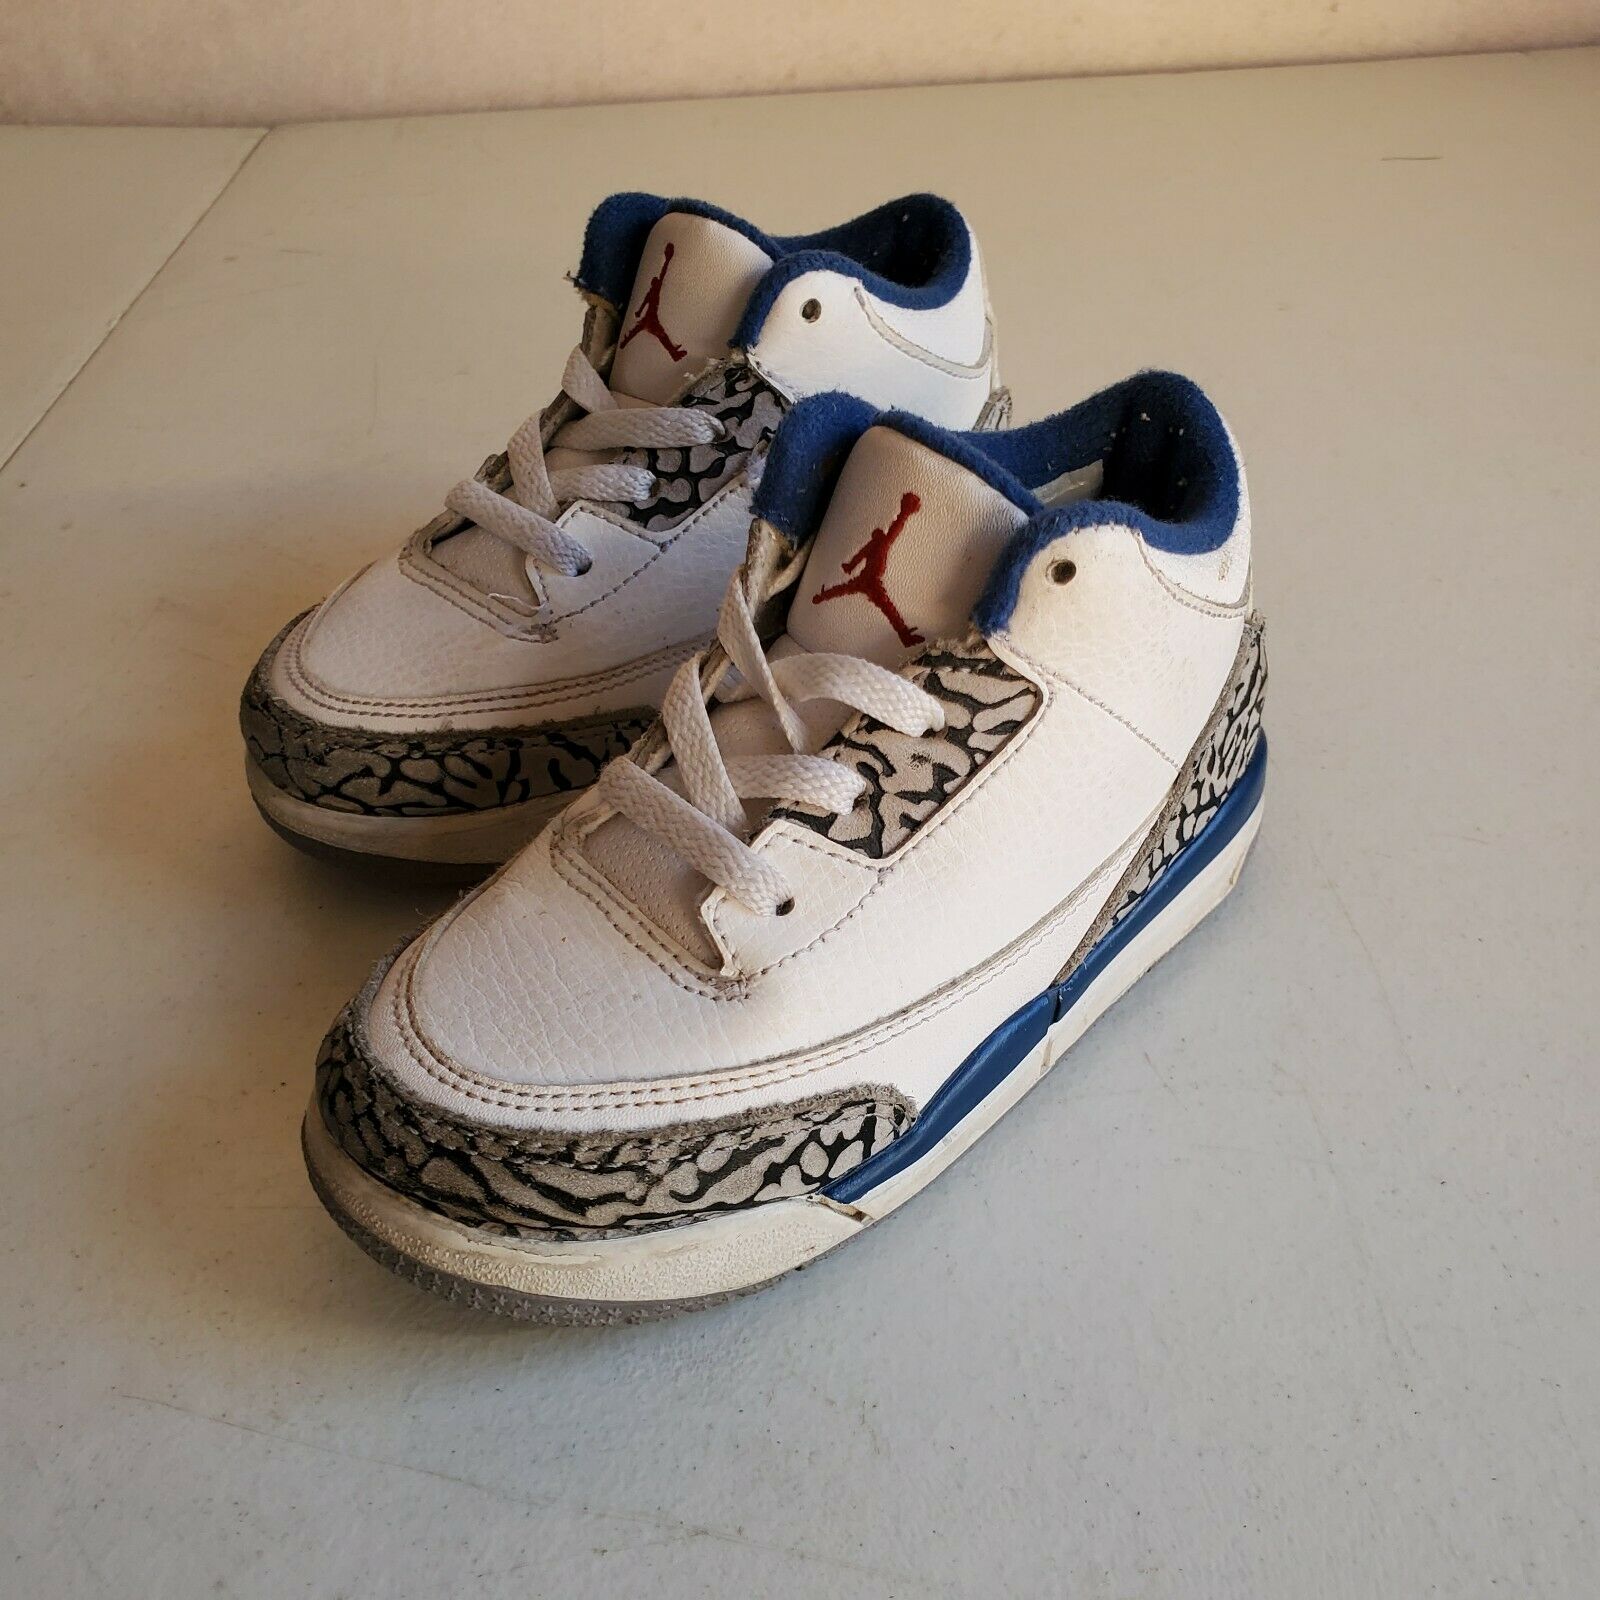 Nike Air Jordans3 Retro BT 832033-104 Toddler Boys Girls Basketball Shoes Sz 8C